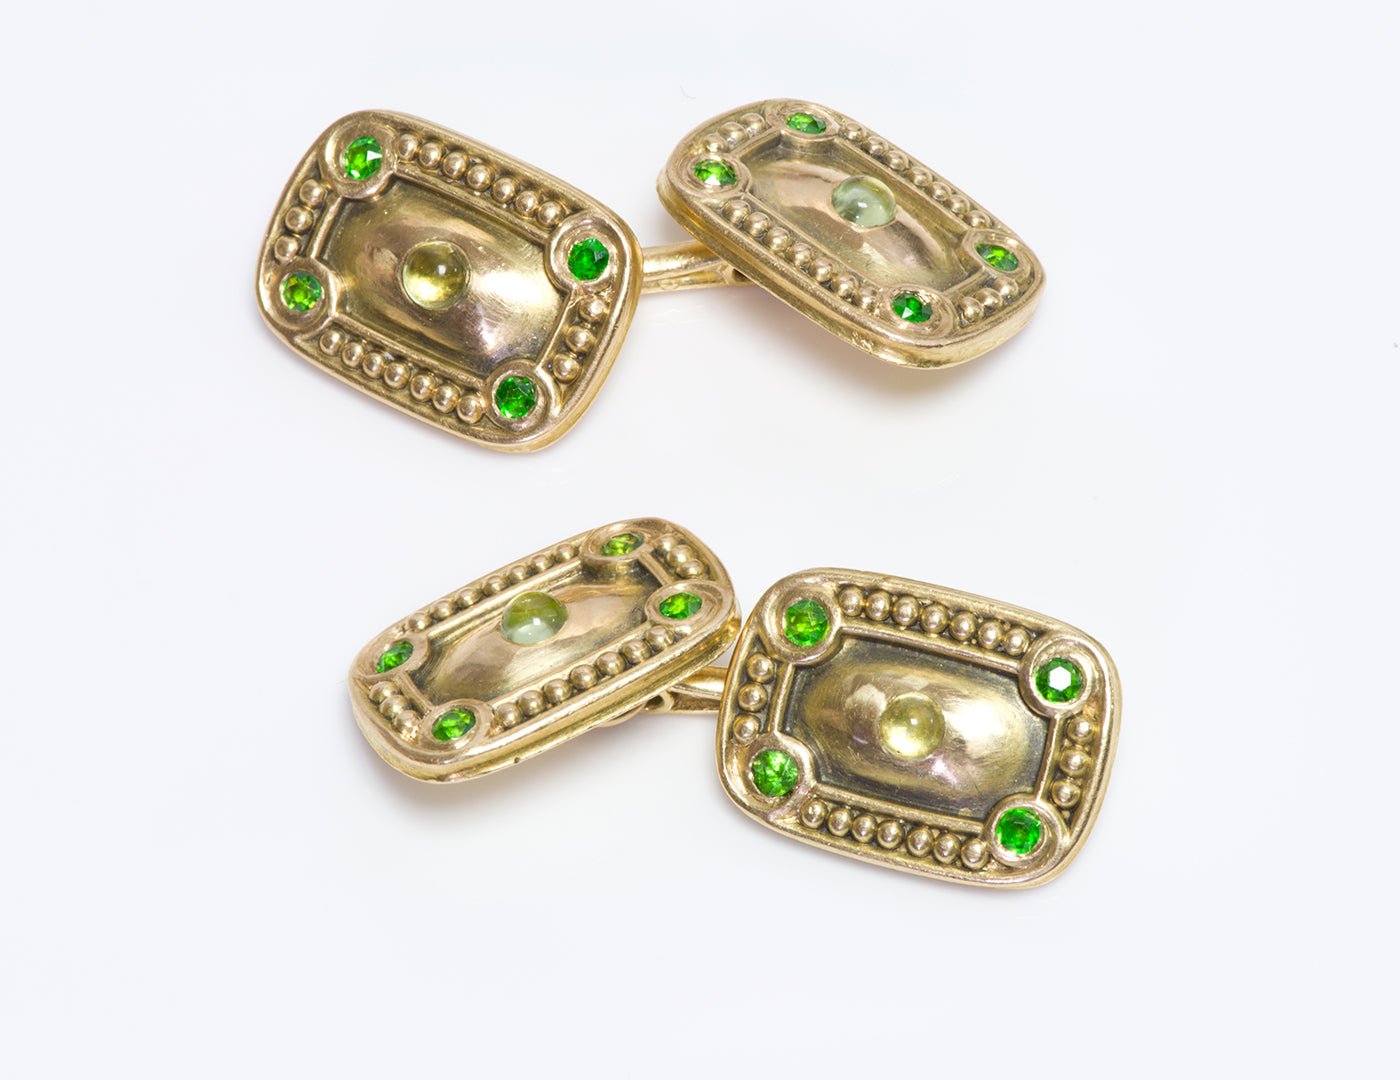 Tiffany & Co. Antique Gold Demantoid Cufflinks